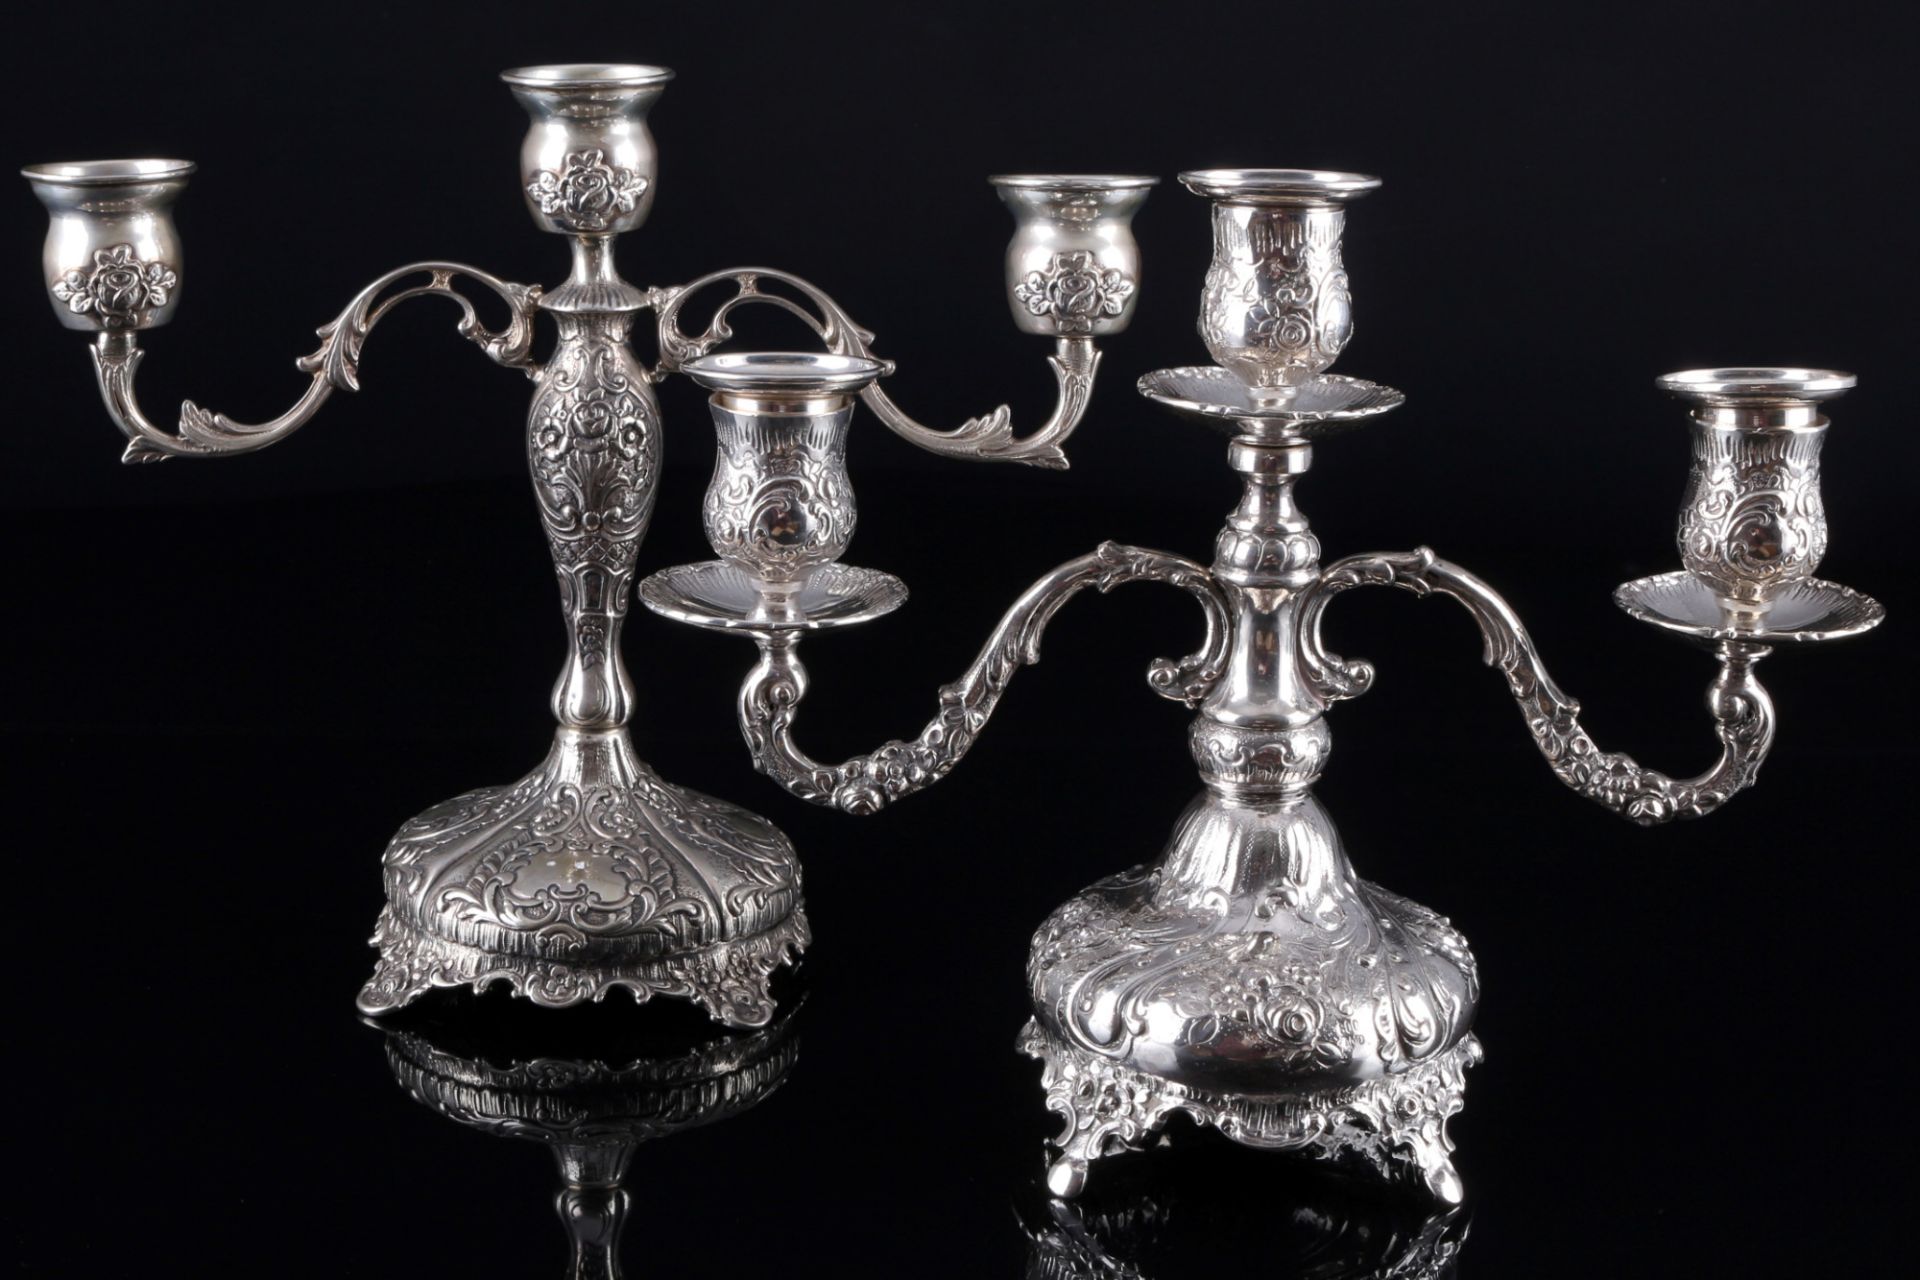 800 Silber 2 Kerzenständer mit Rosendekor, 3-flammig, silver candelabras,